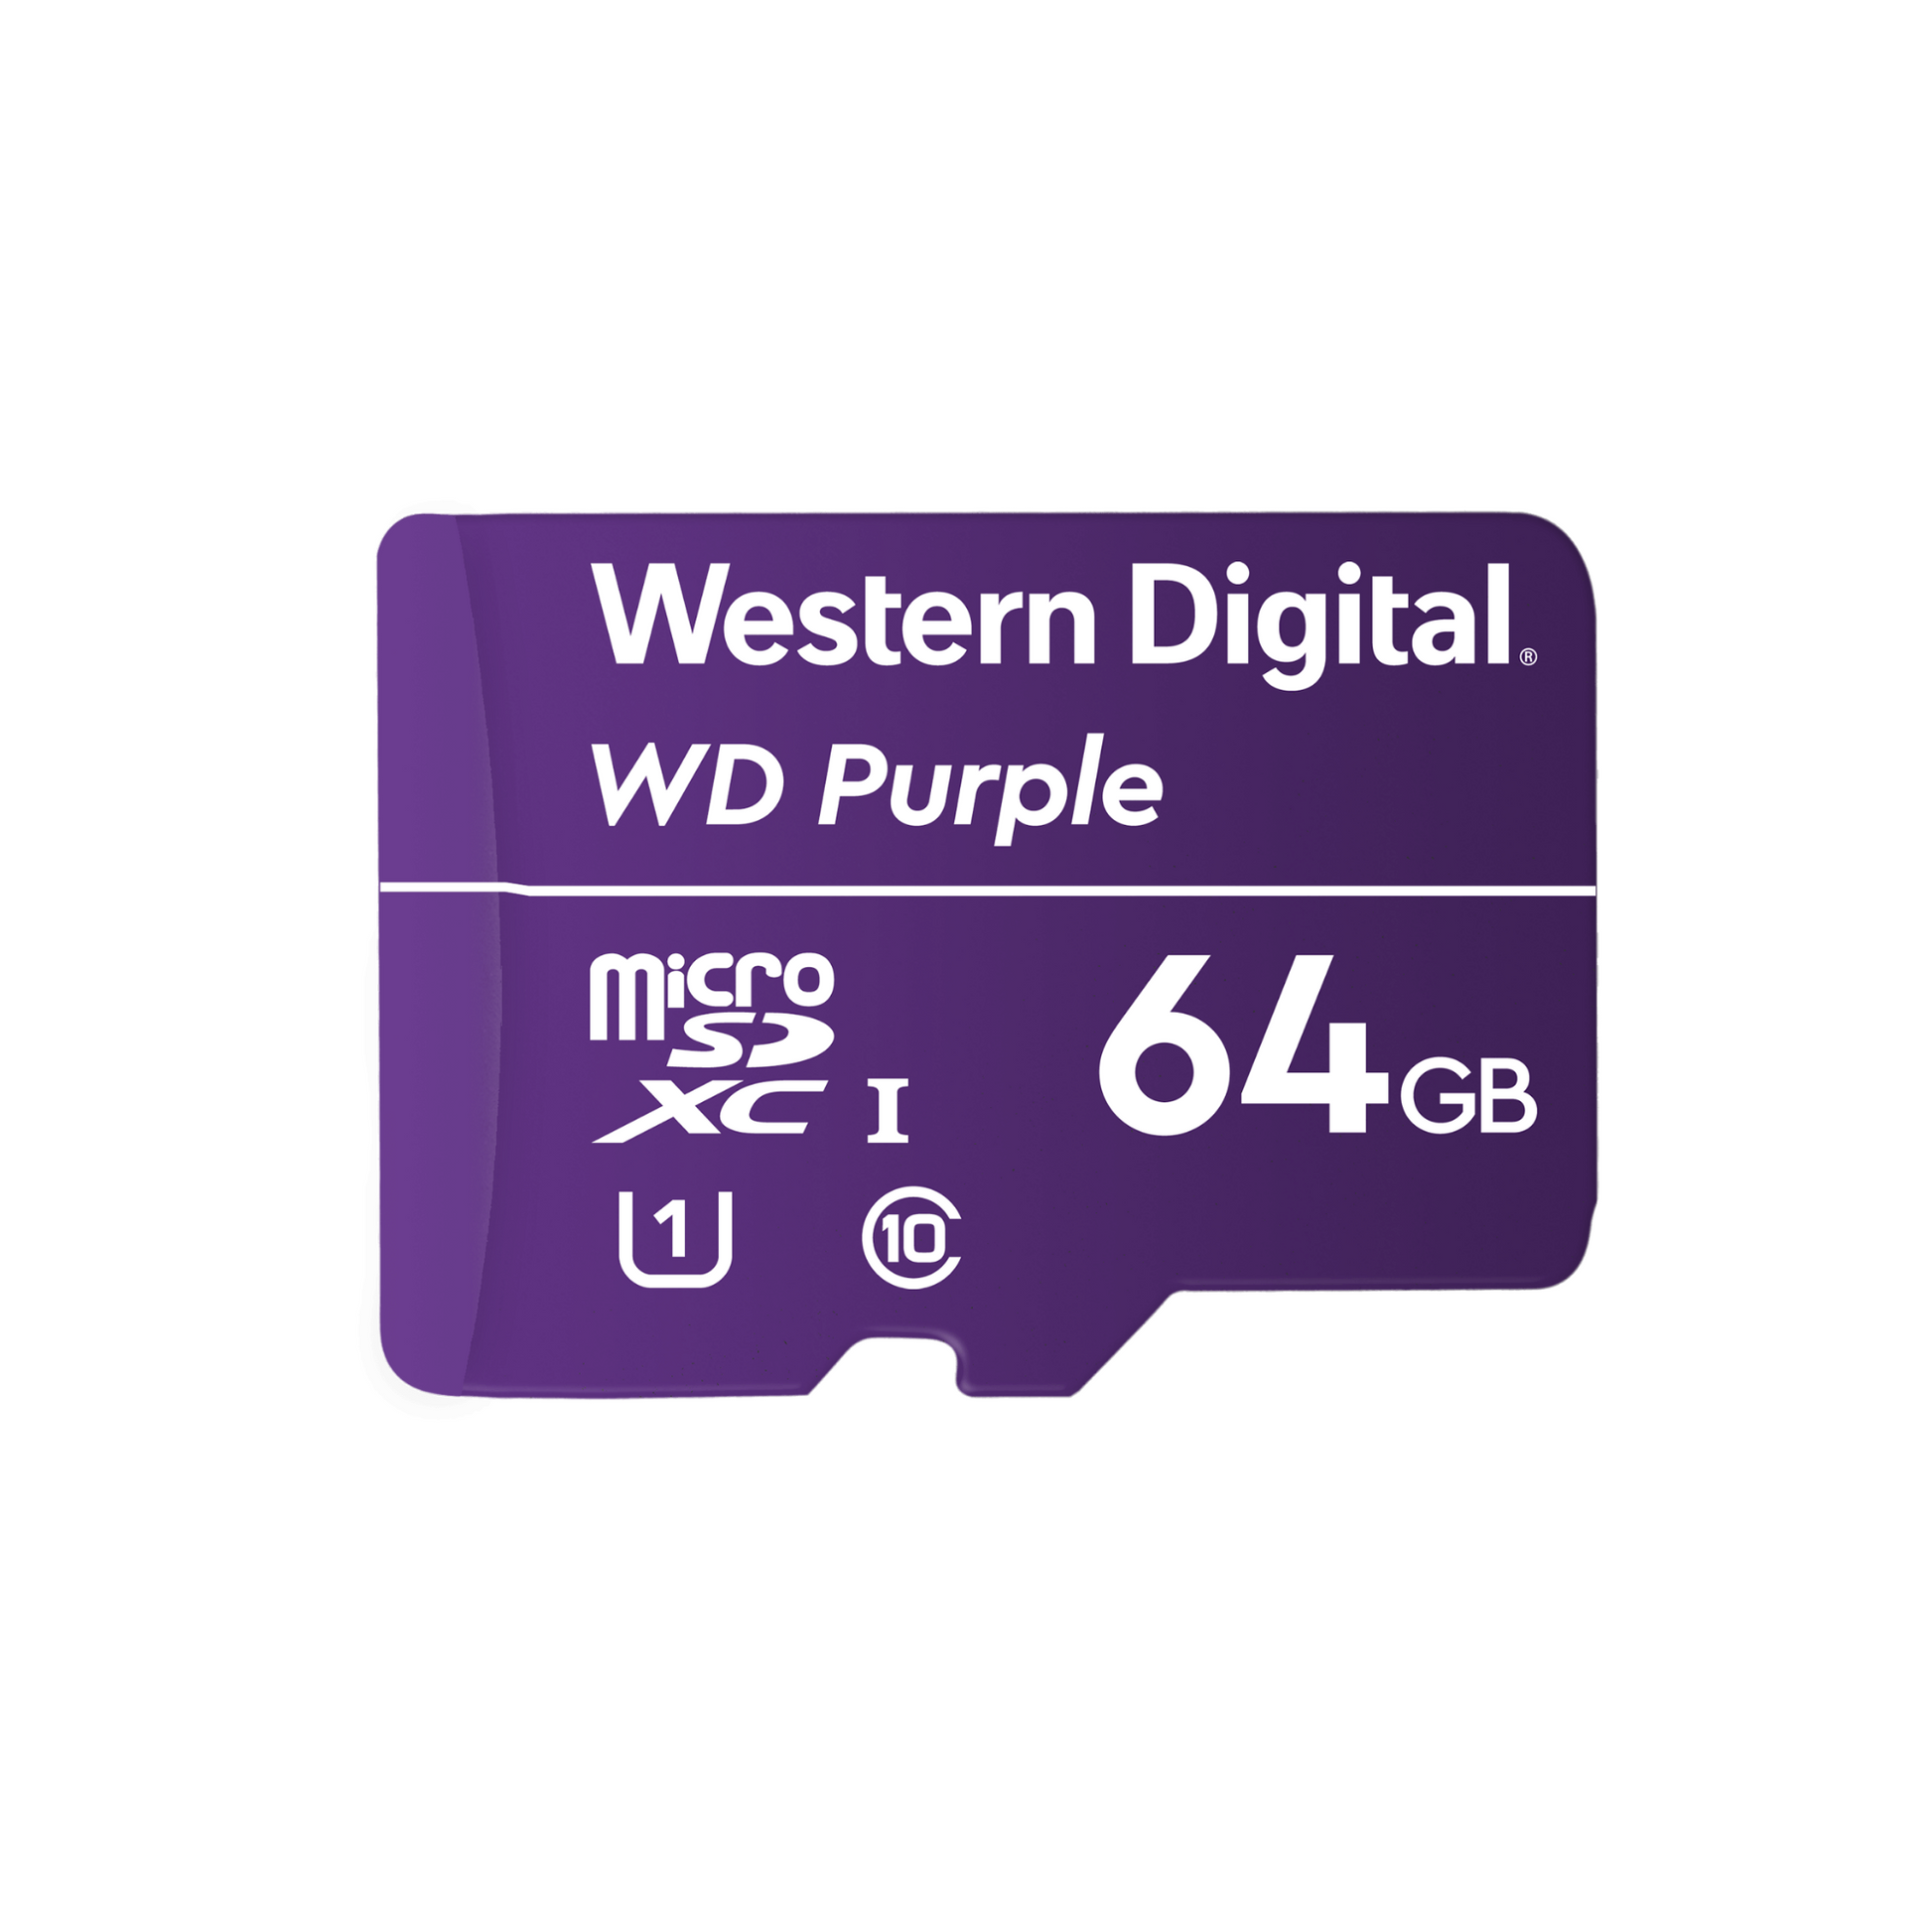 WD Purple 64GB microSD